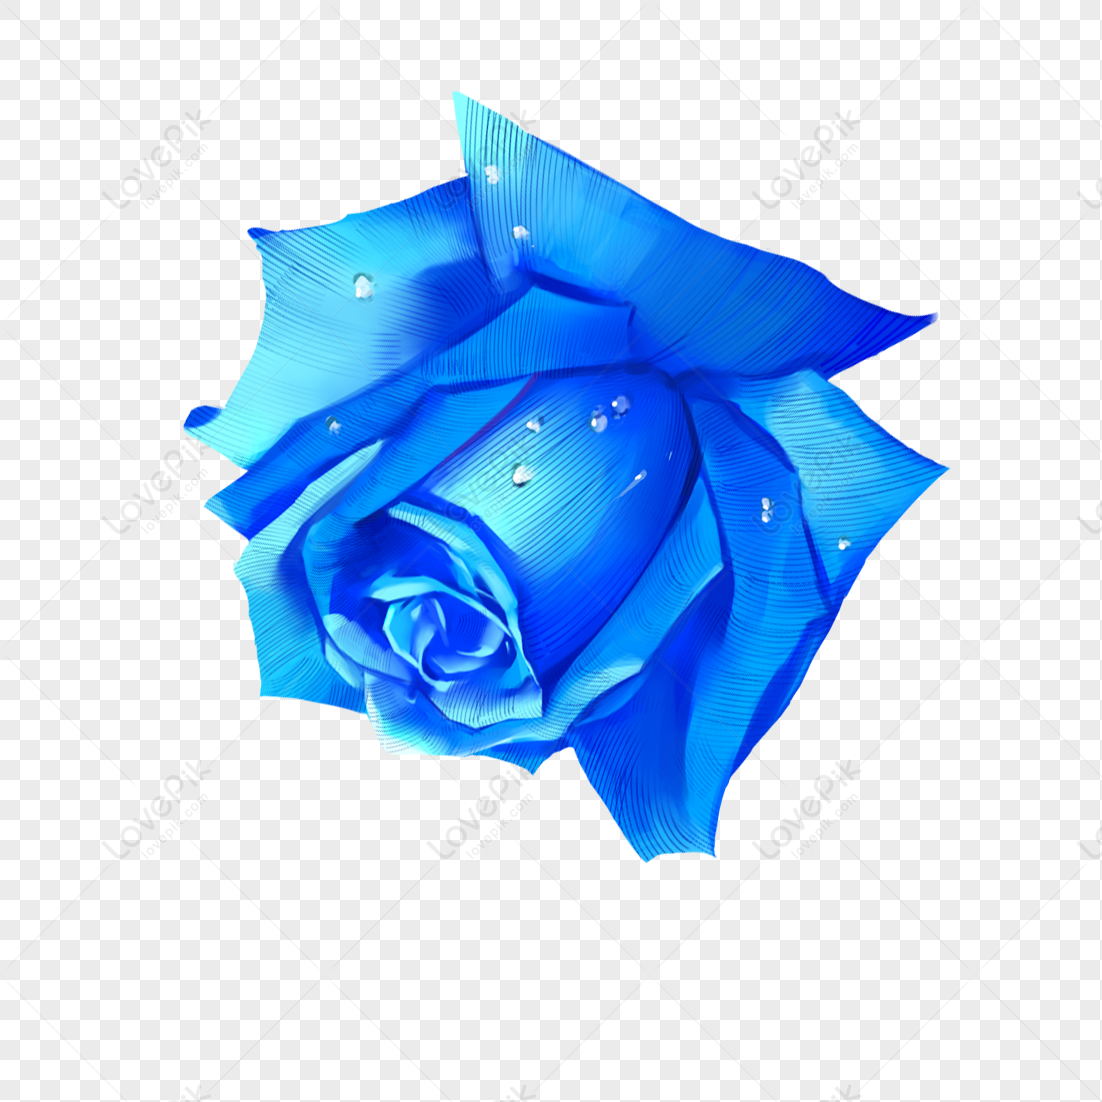 Rosa Azul PNG Imágenes Gratis - Lovepik